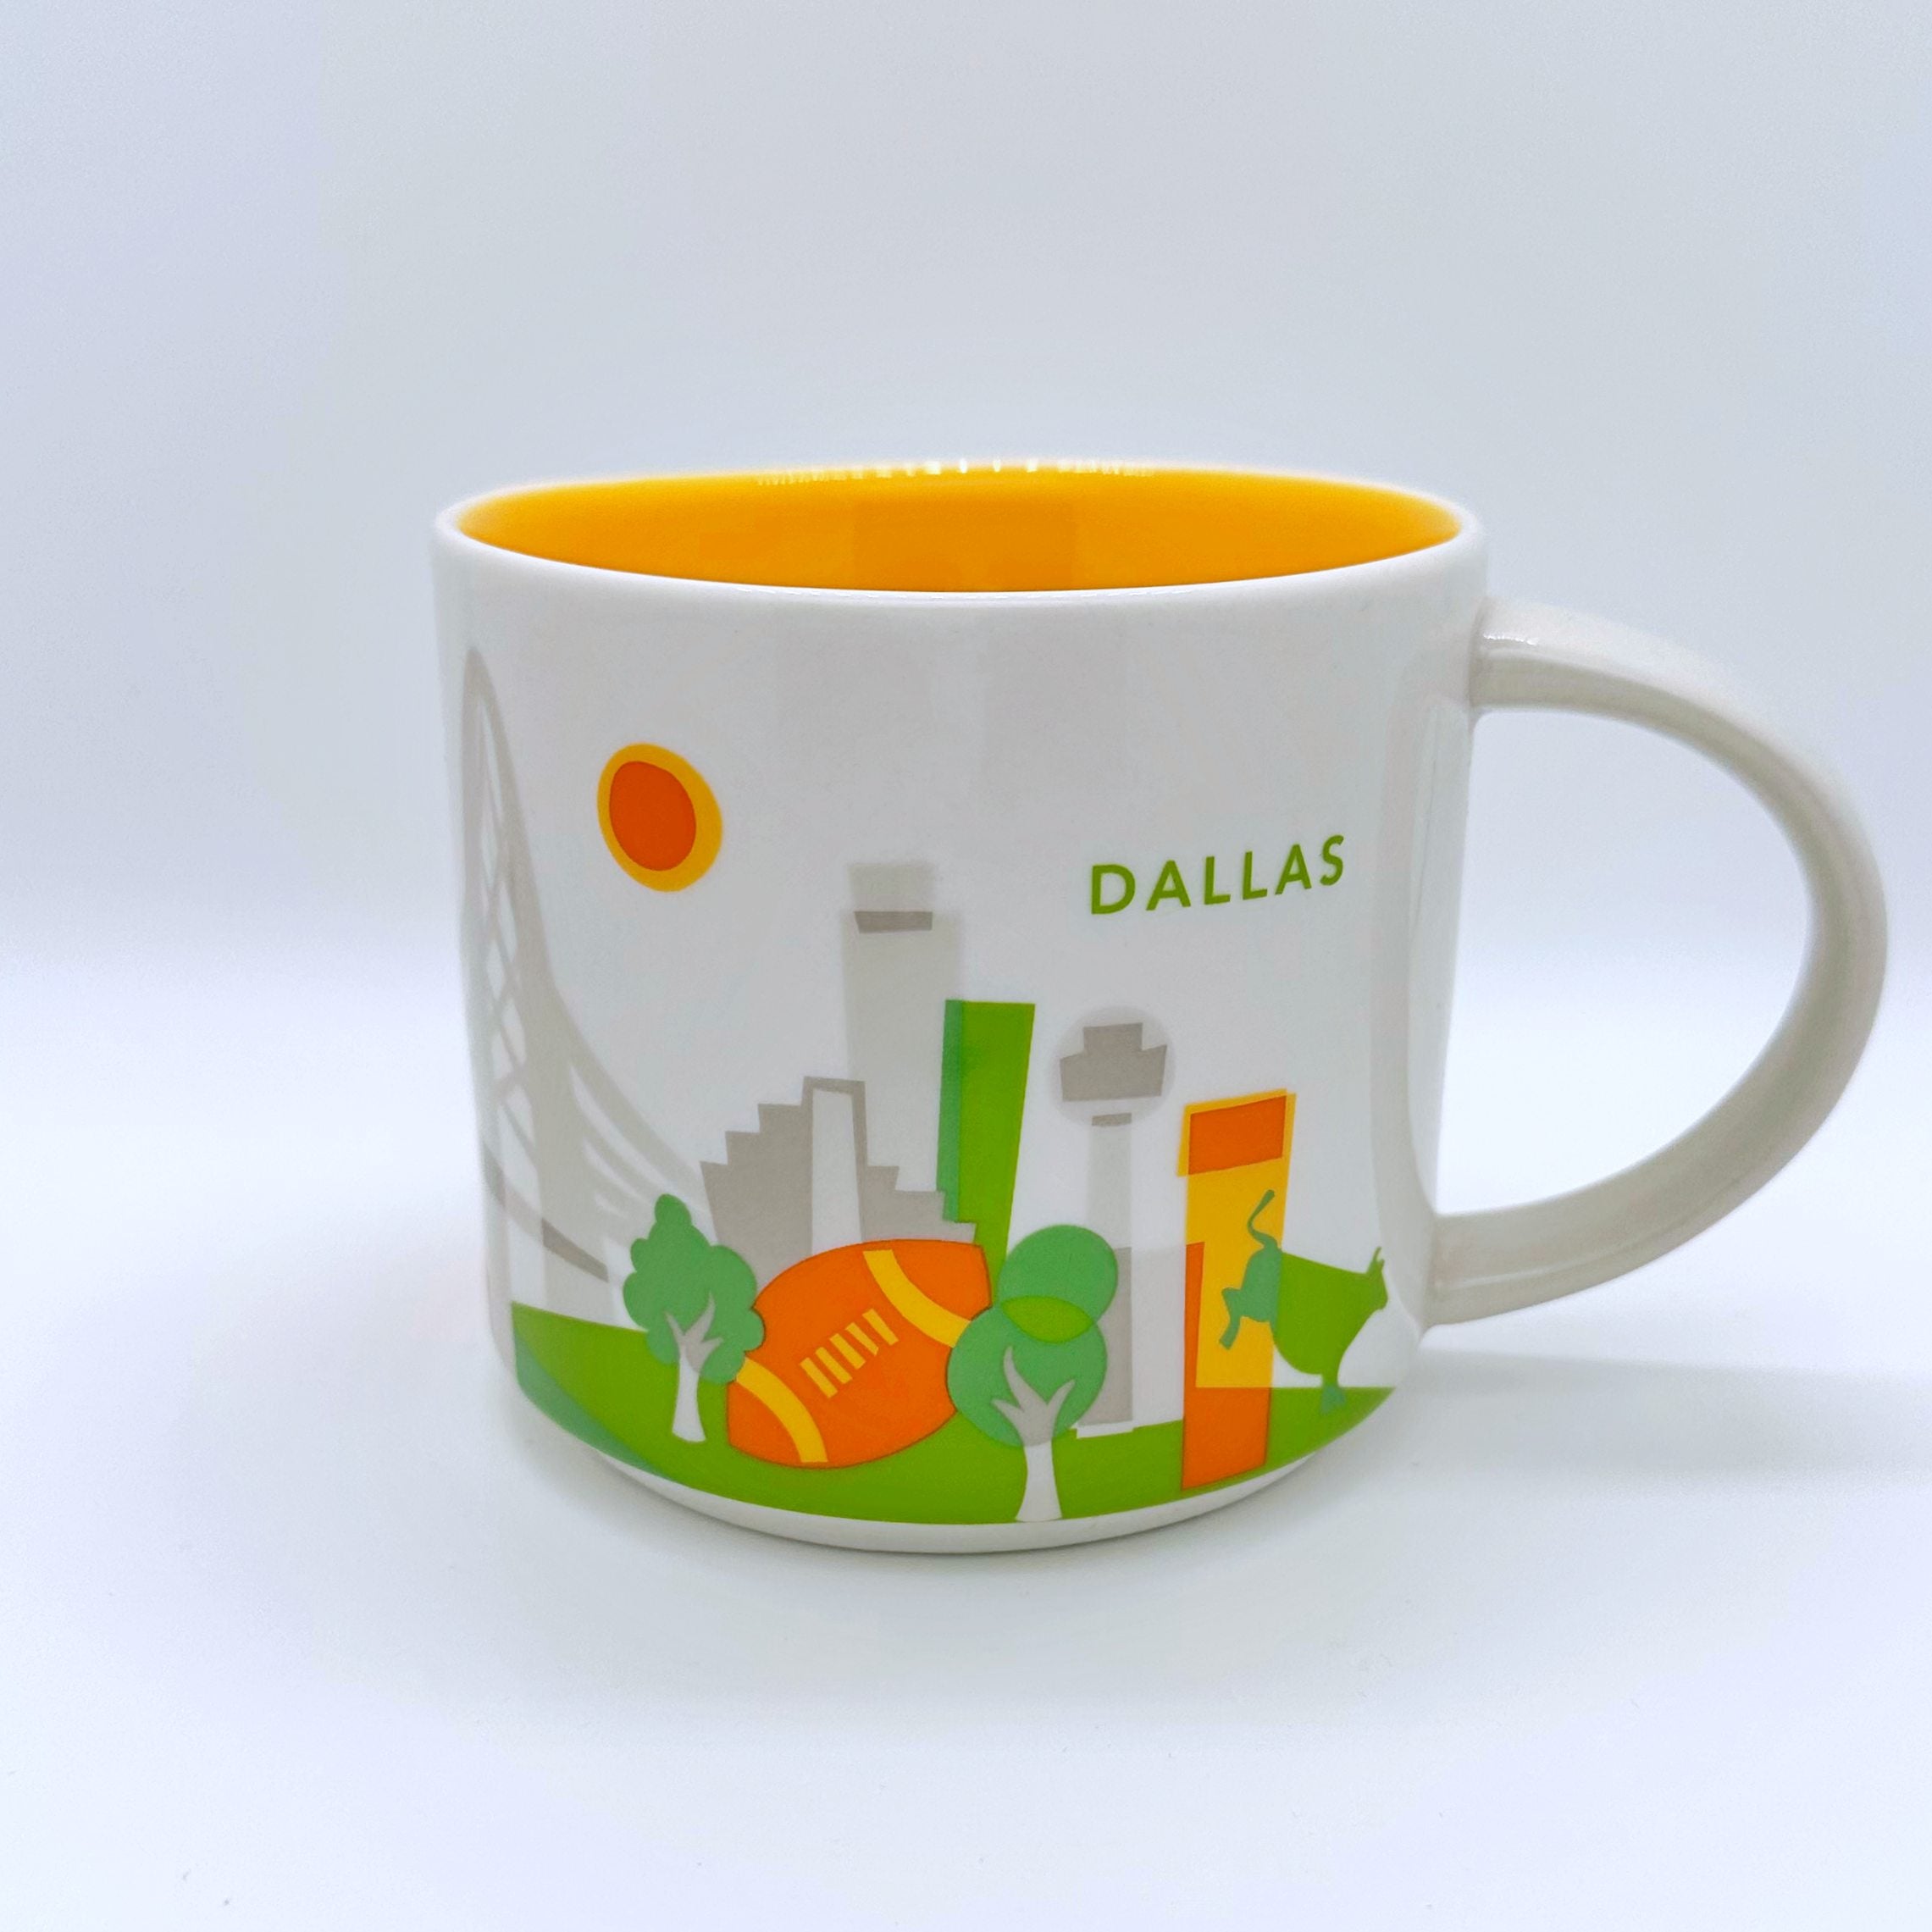 Dallas City Kaffee Tasse